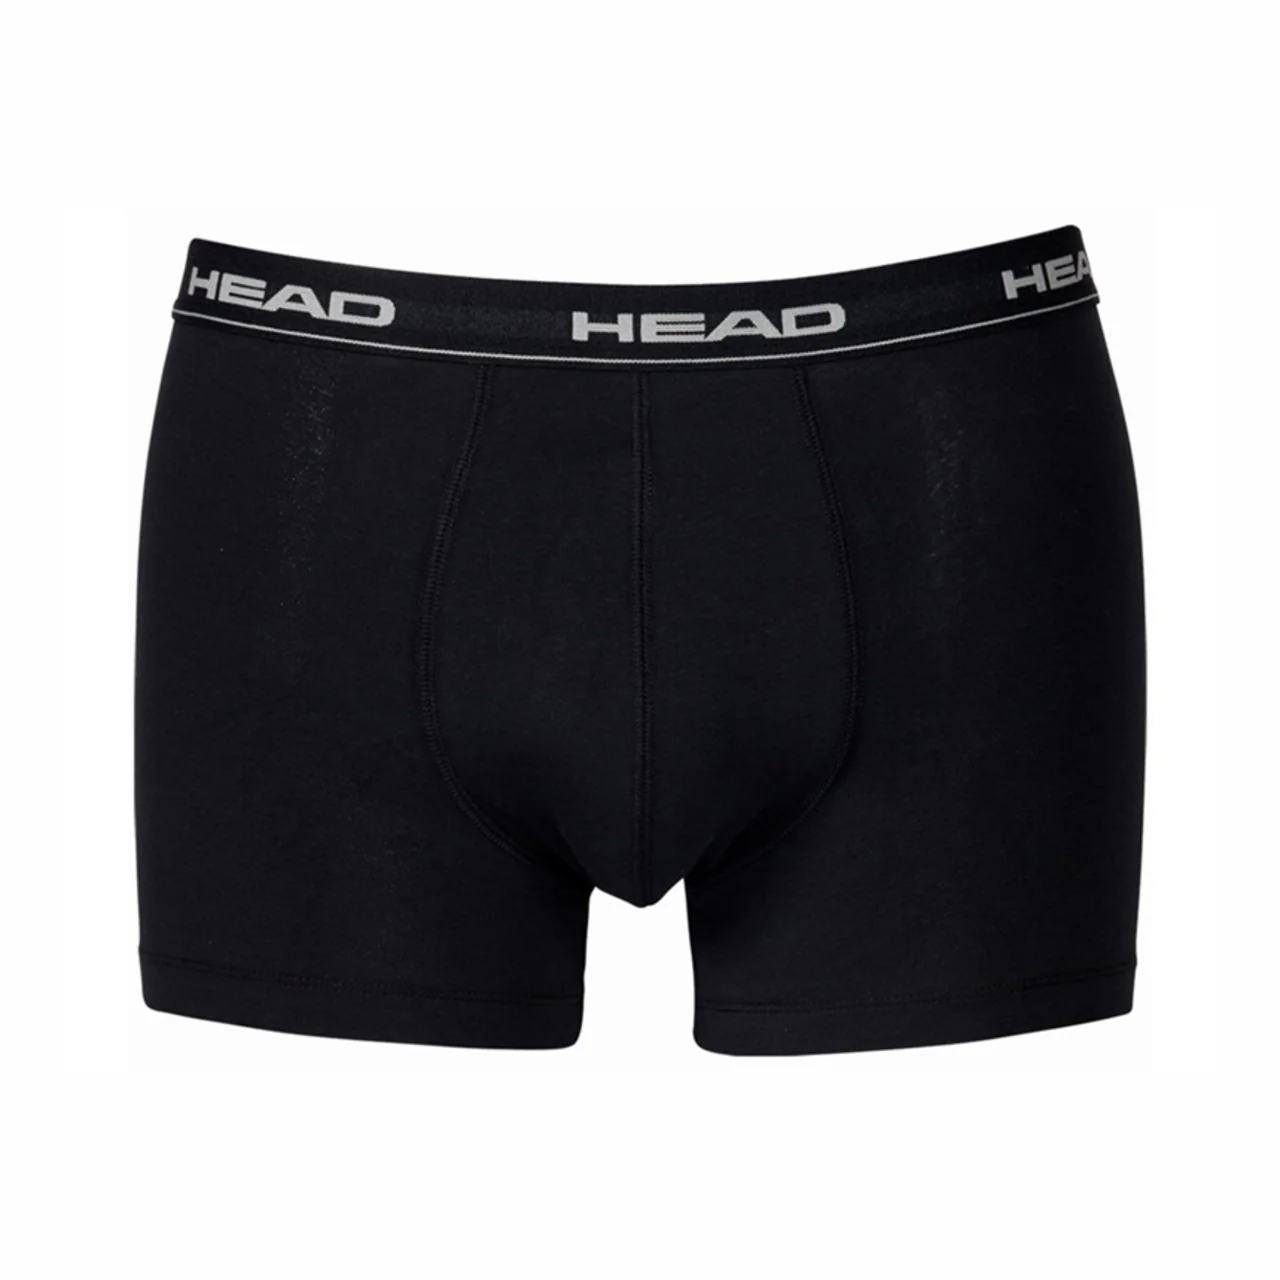 Head Boxer Black 2-pack